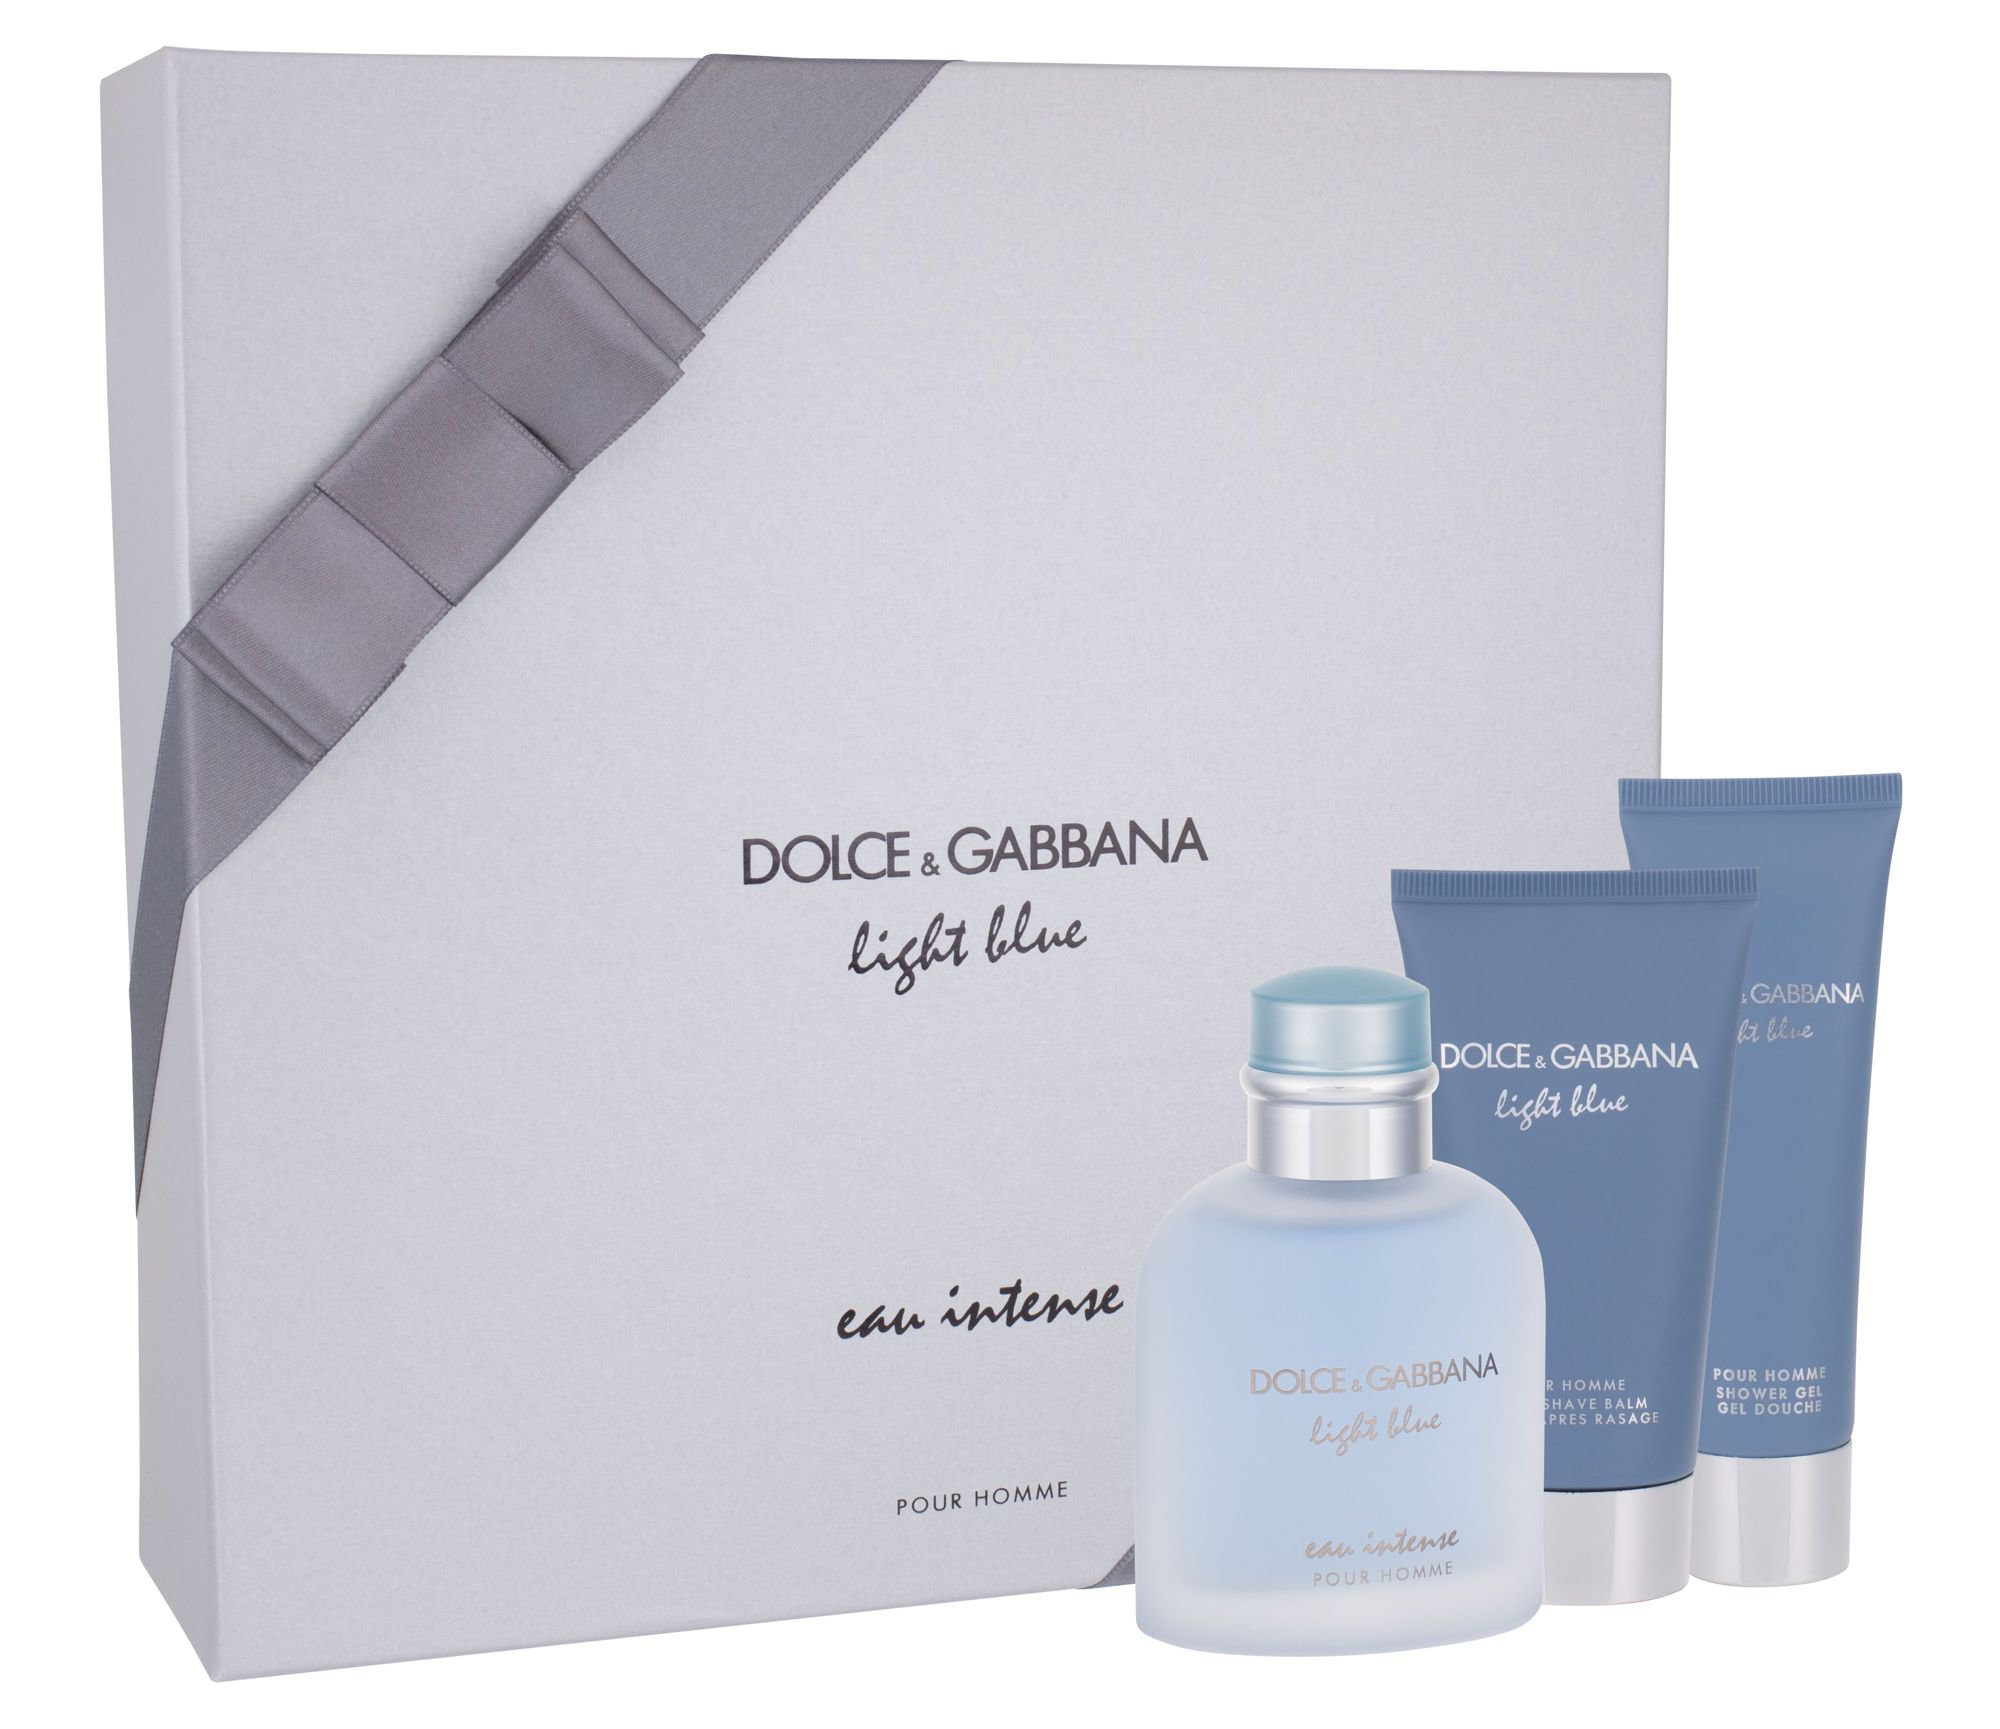 Dolce&Gabbana Light Blue Eau Intense Pour Homme, parfumovaná voda 100 ml + sprchovací gél 50 ml + Balzám po holení 75 ml